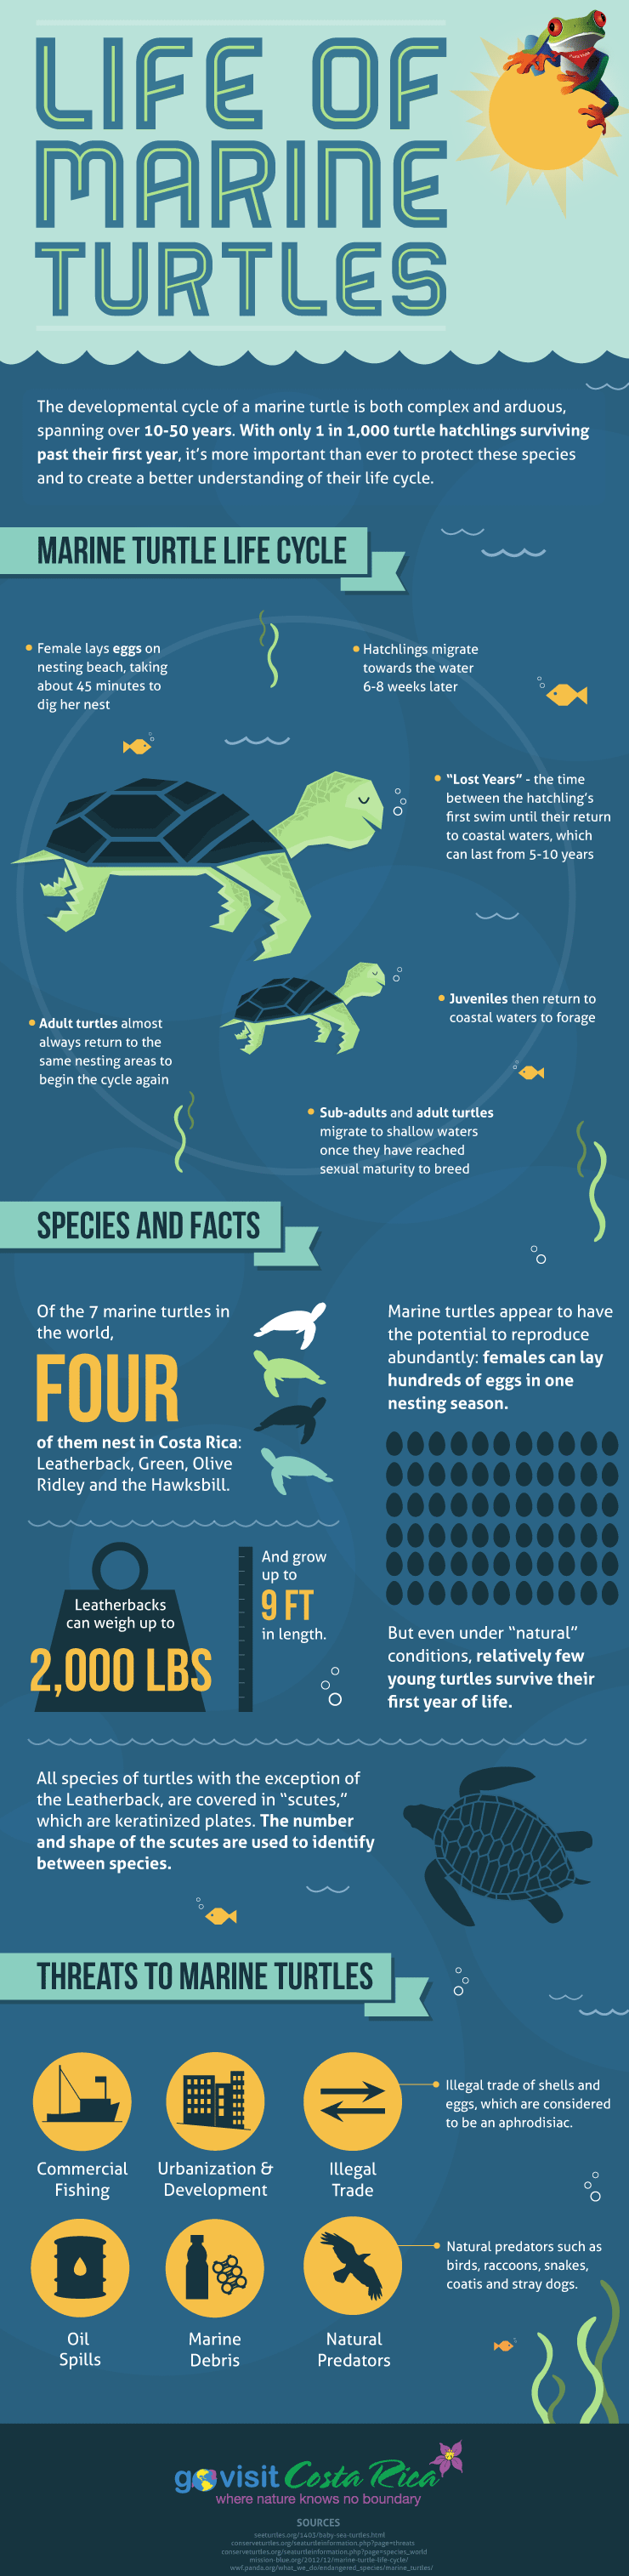 Life of Marine Turtles - Infographic